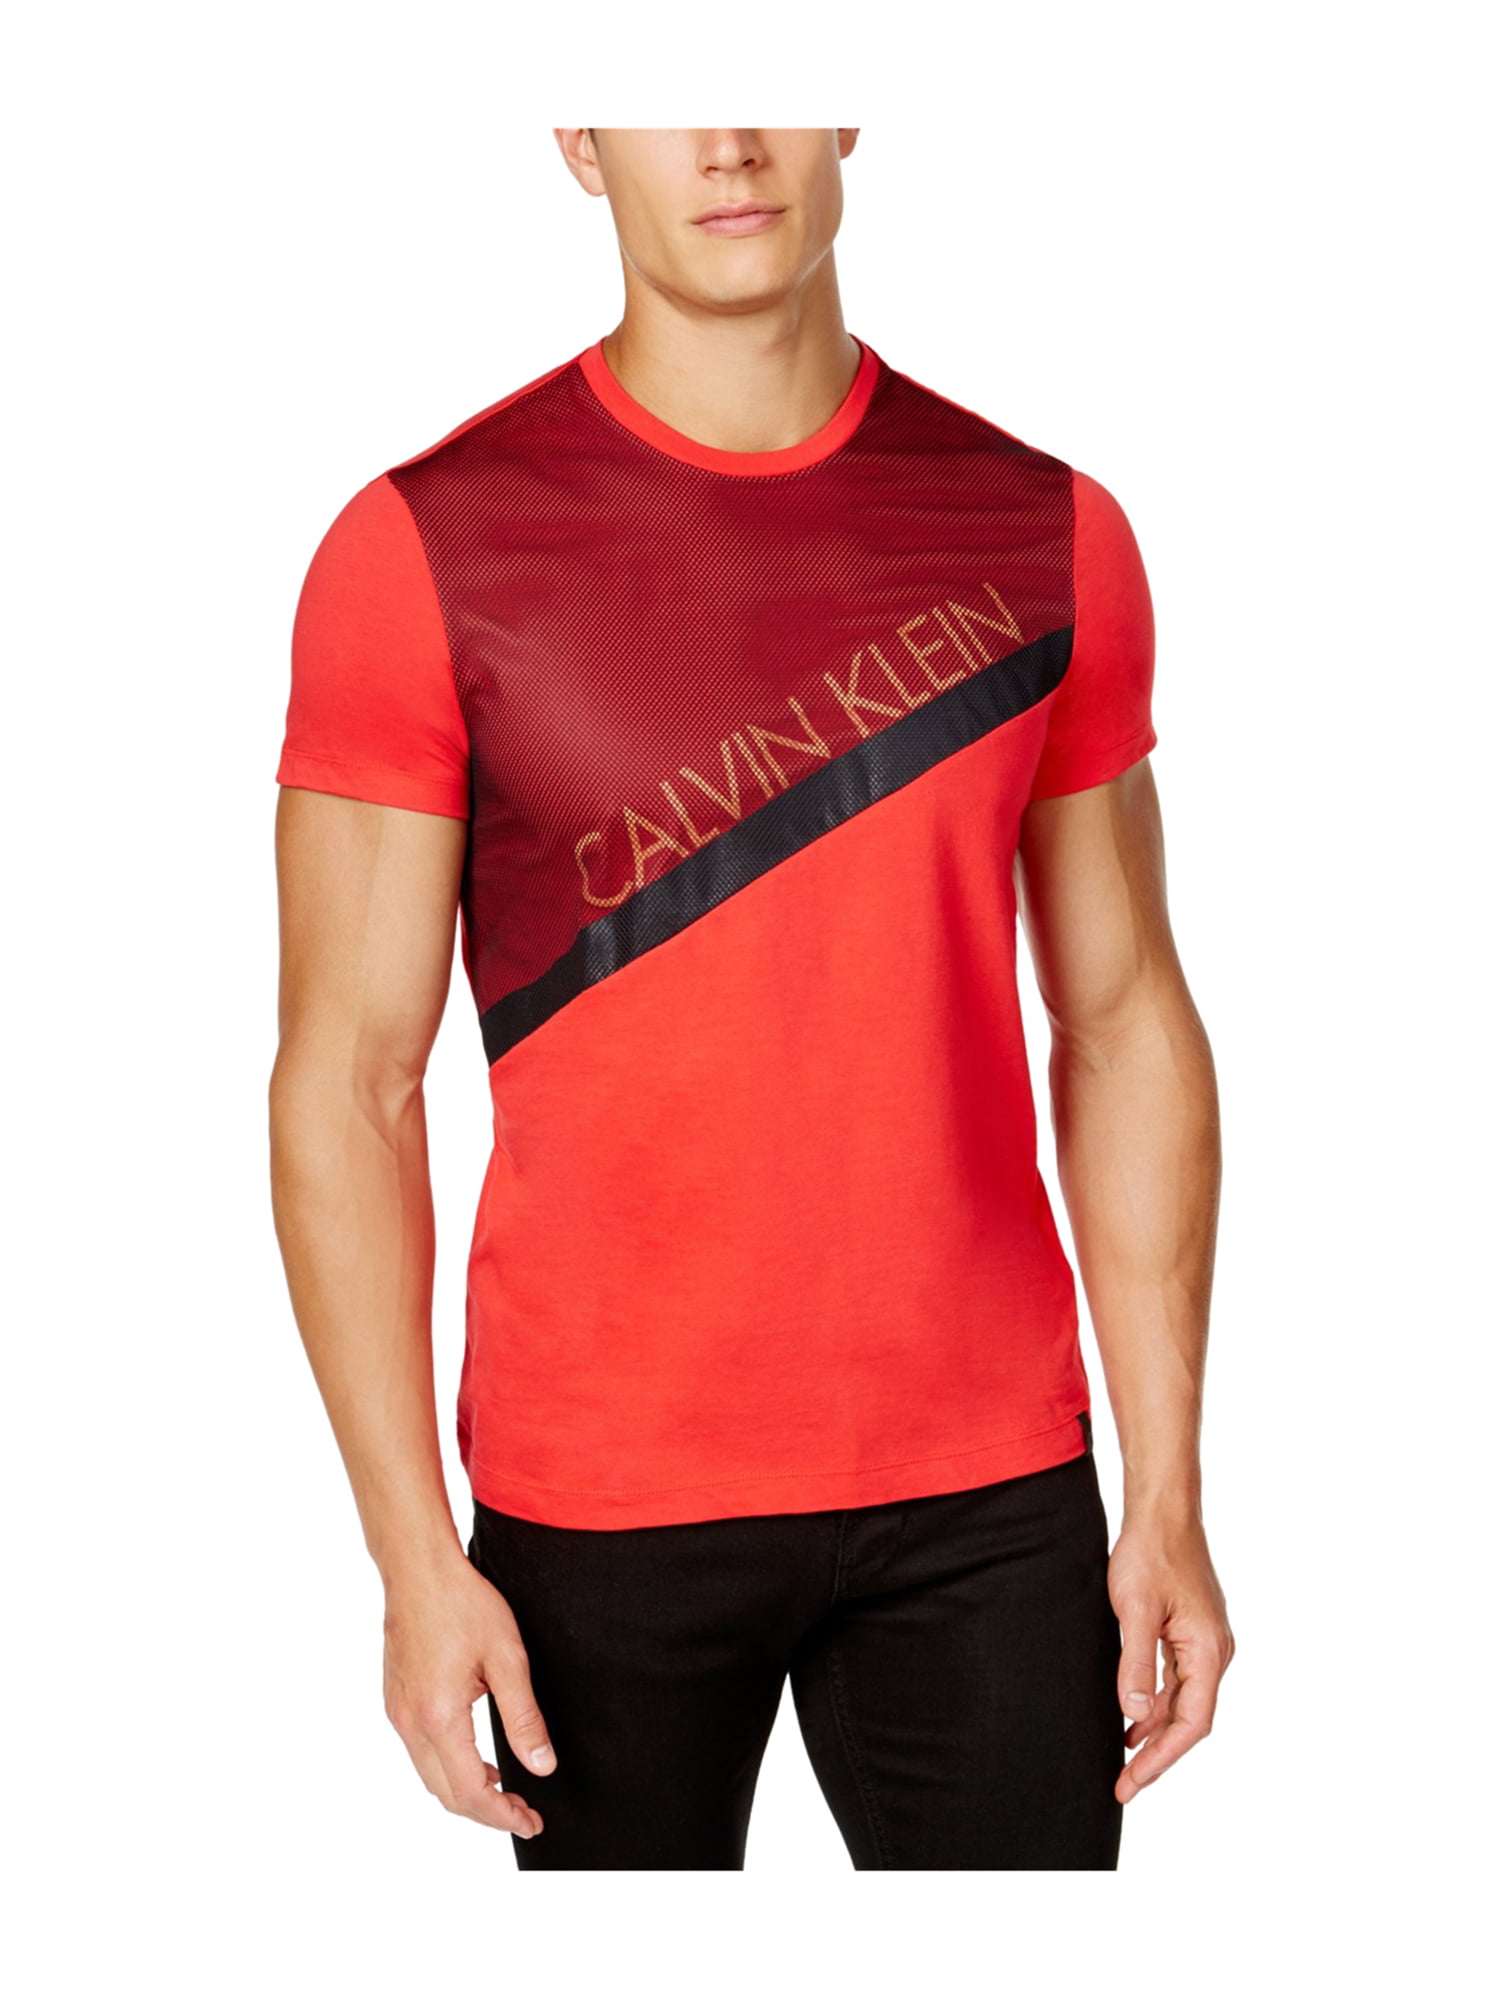 Calvin Klein - Calvin Klein Mens Panel Graphic T-Shirt - Walmart.com ...